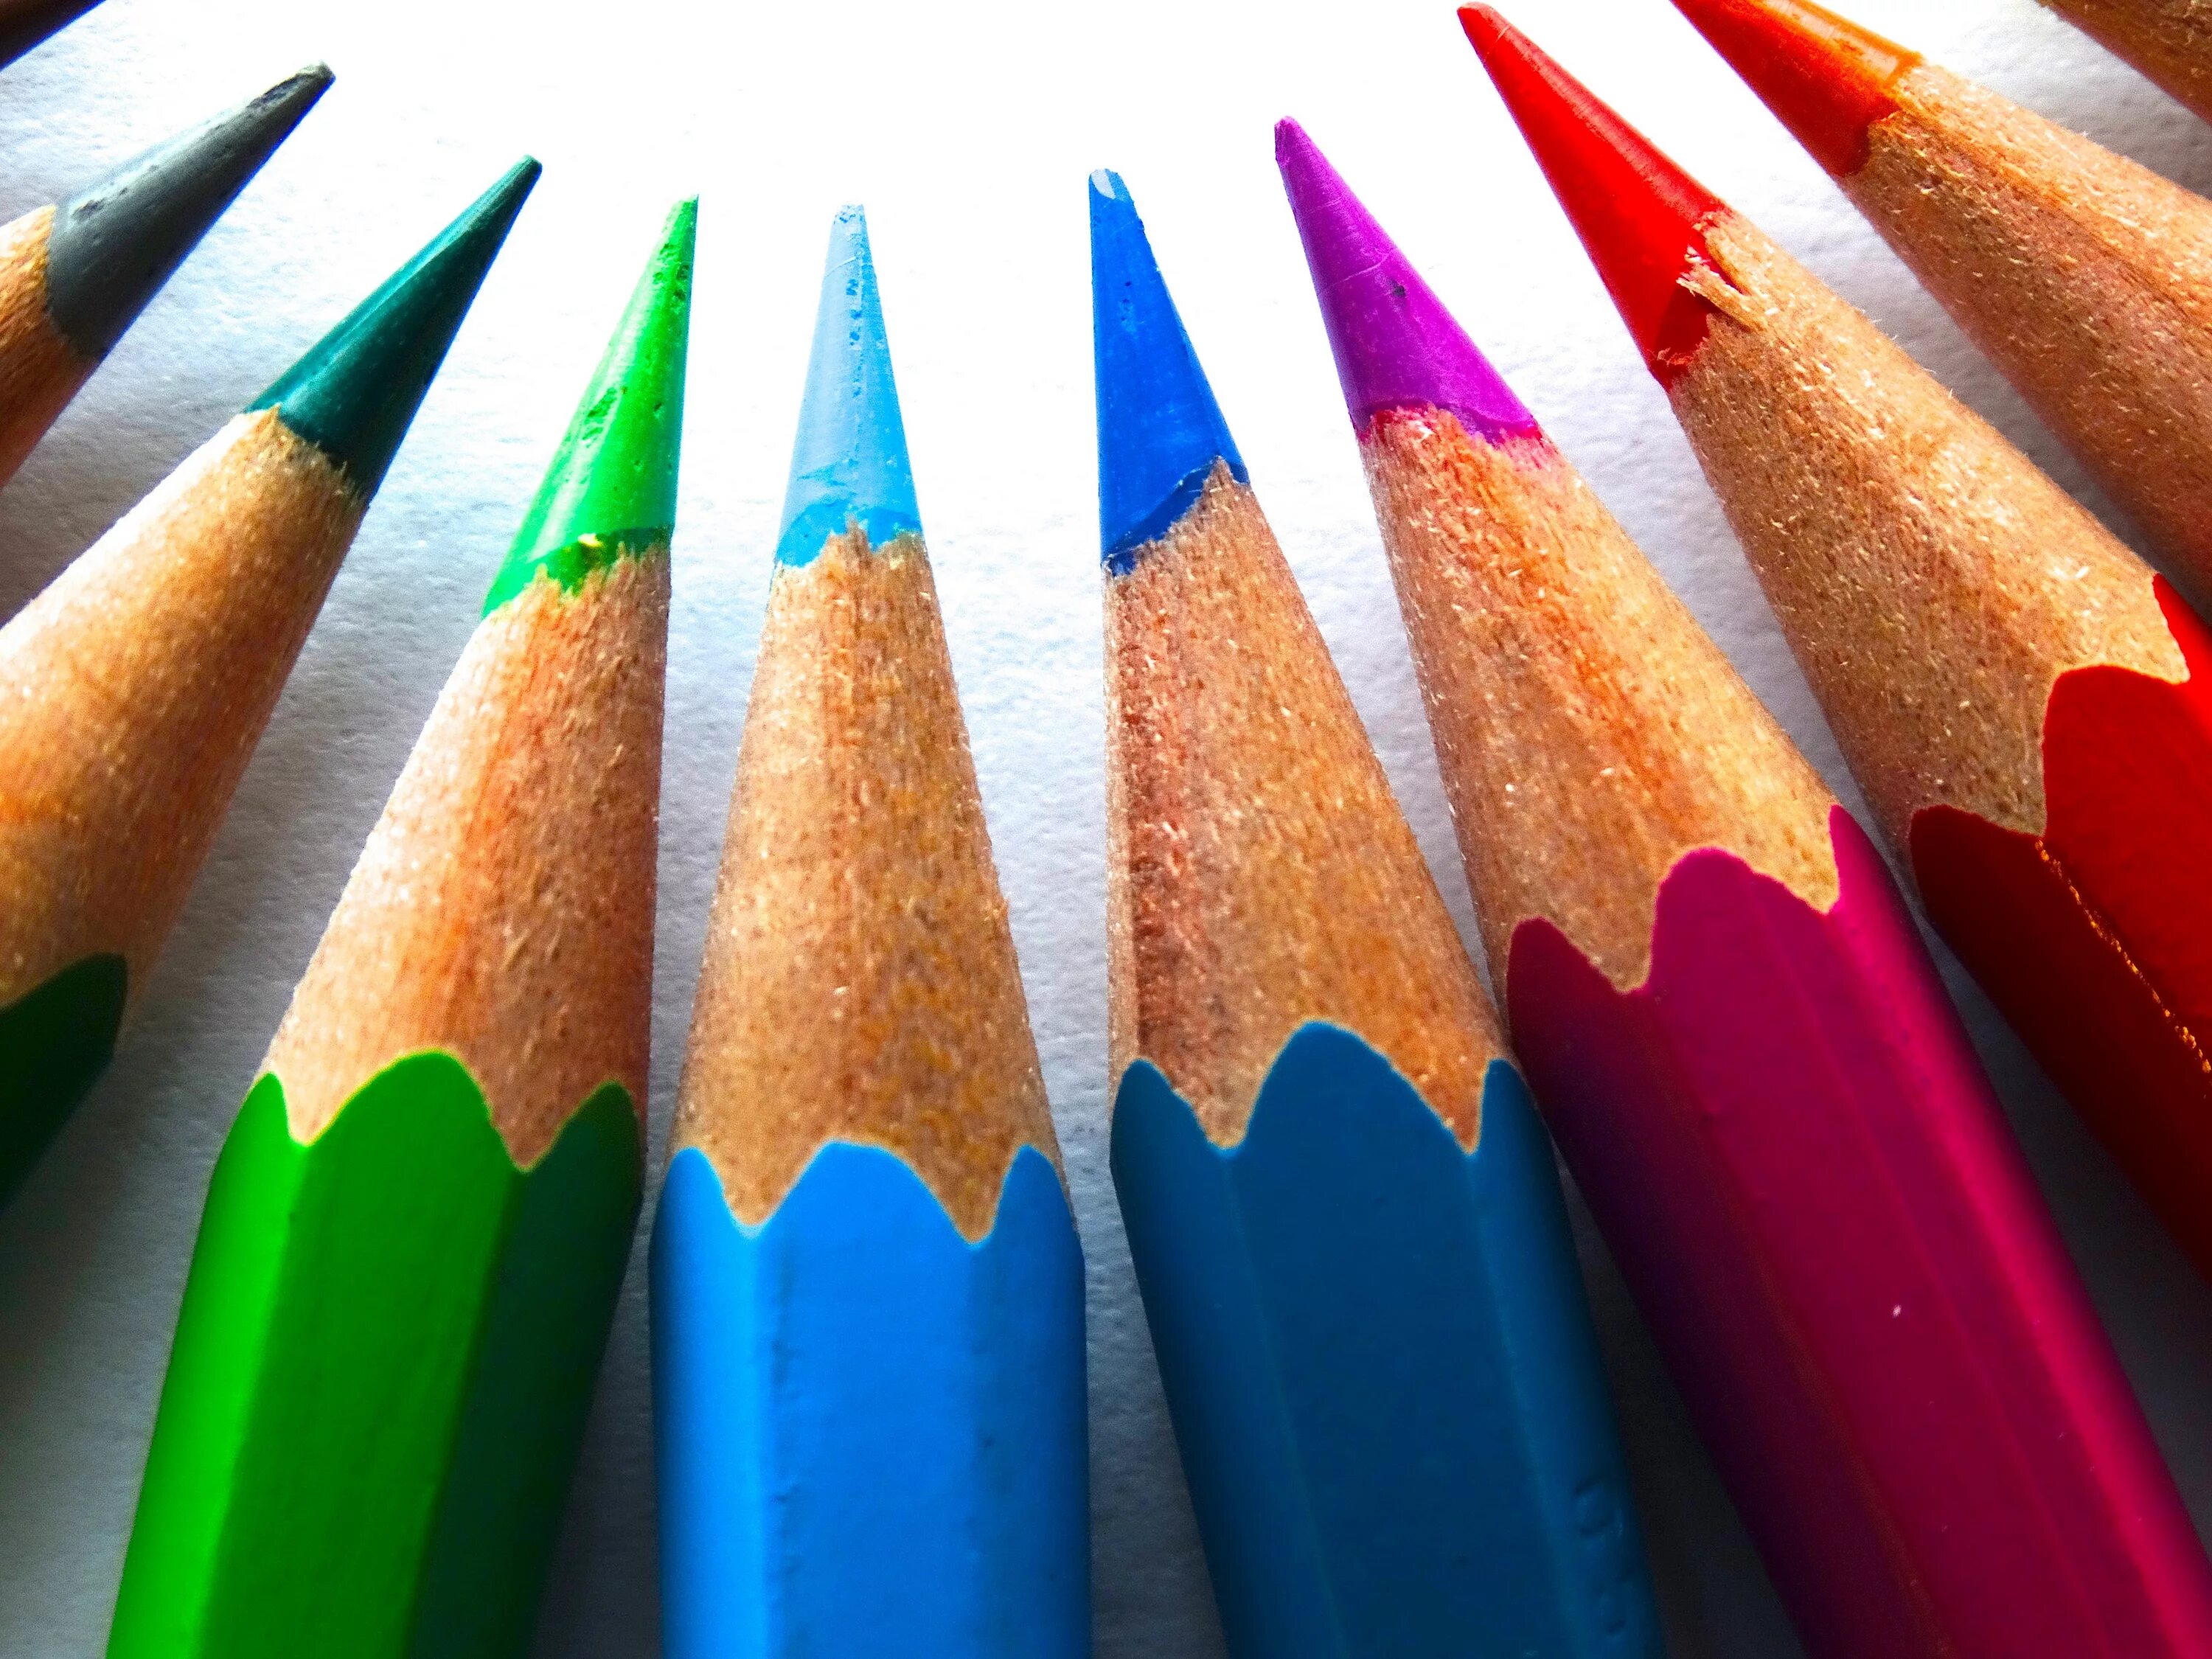 Pencils brushes. Карандаши цветные. Карандаши и краски. Краски Кисточки карандаши. Цветные карандаши и Кисточки.